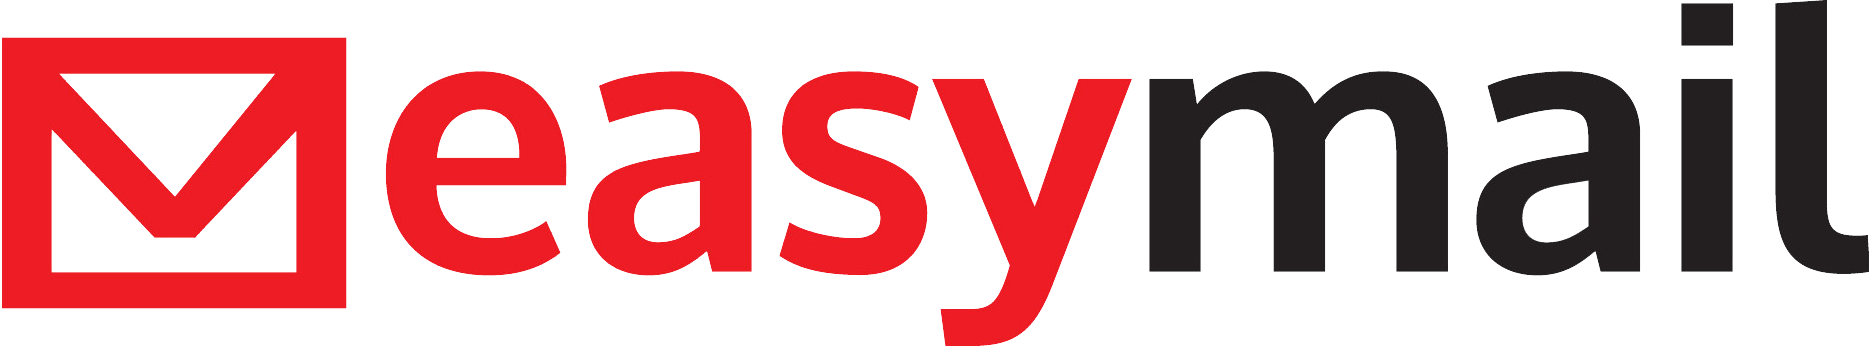 easymail_logo